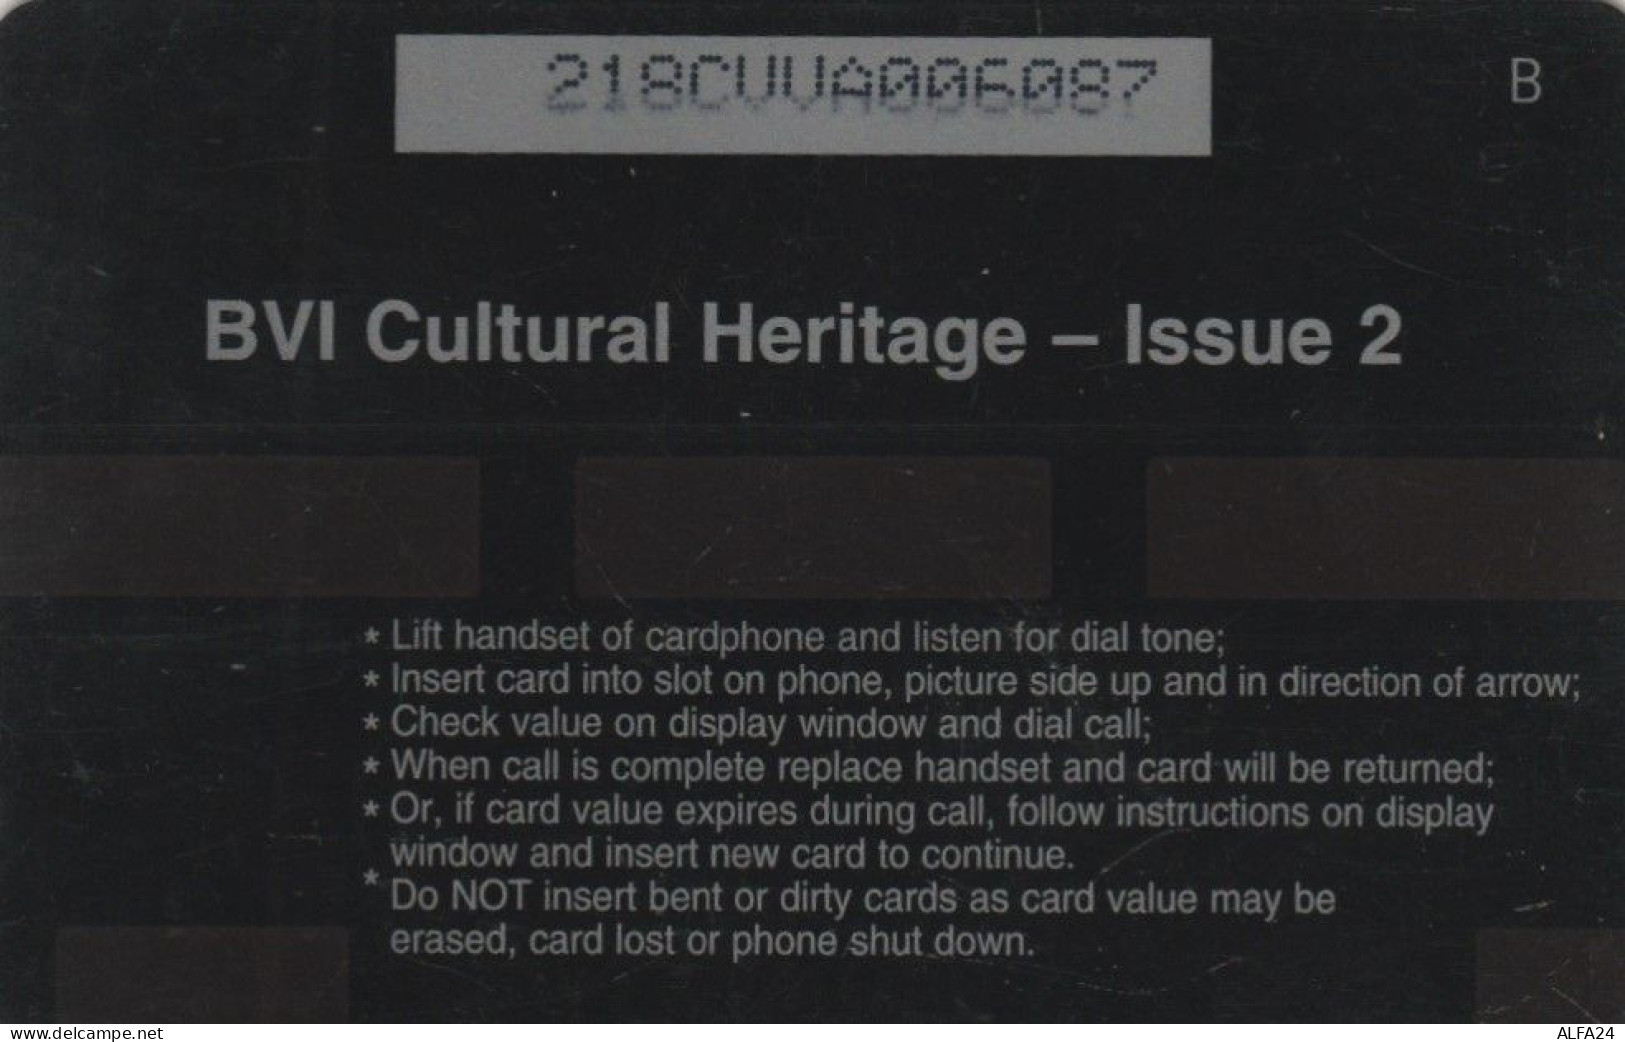 PHONE CARD BRITISH VIRGIN ISLAND  (E98.9.8 - Maagdeneilanden